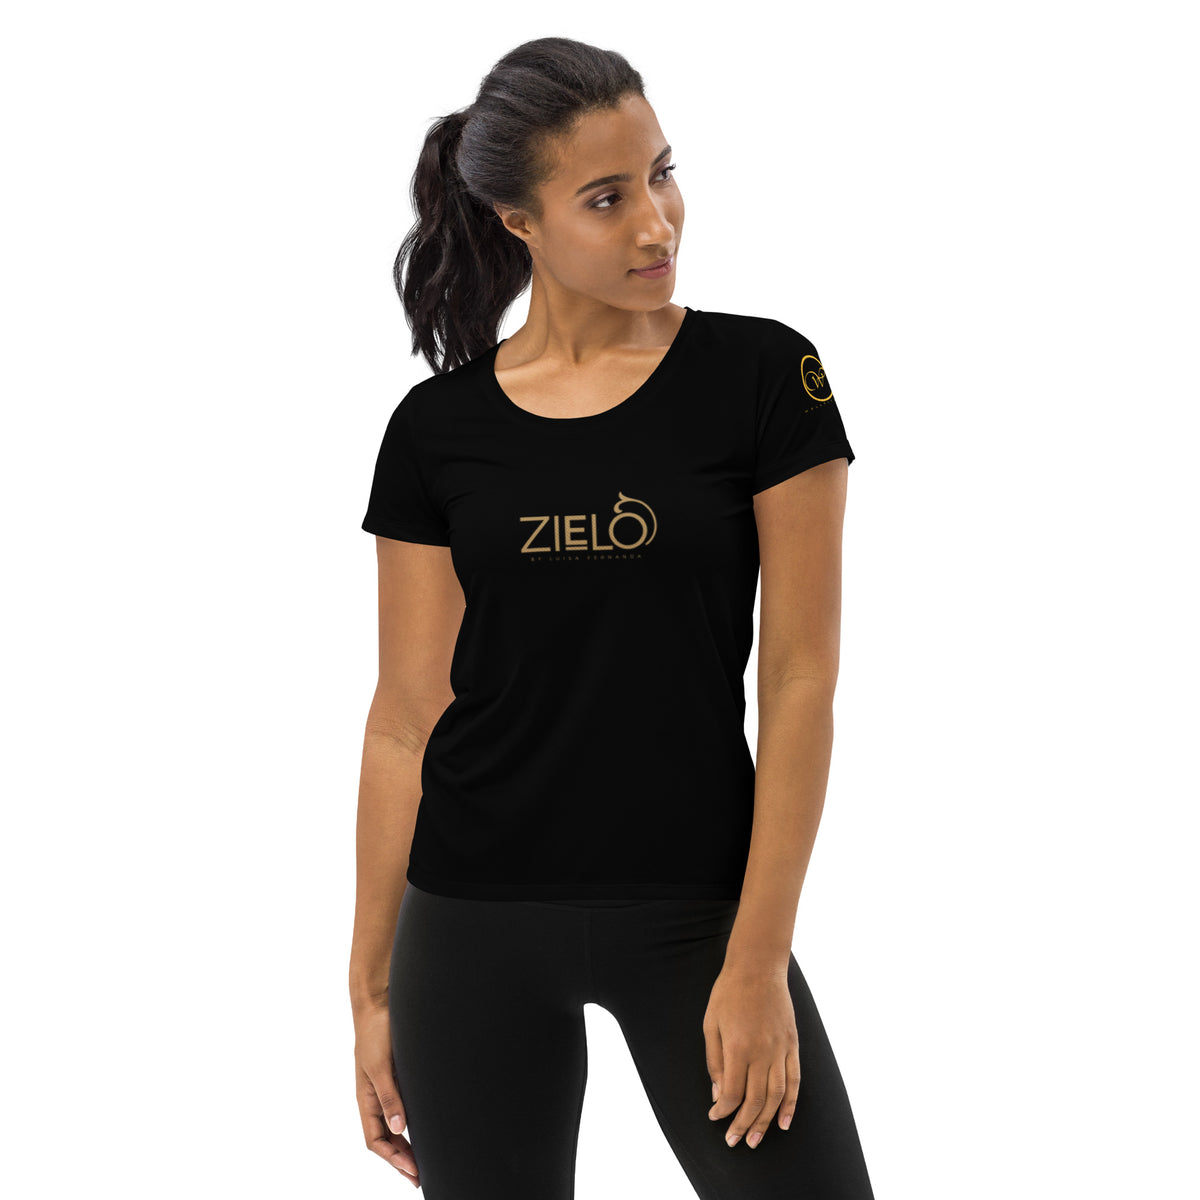 Zielo Women's Athletic T-shirt service providers